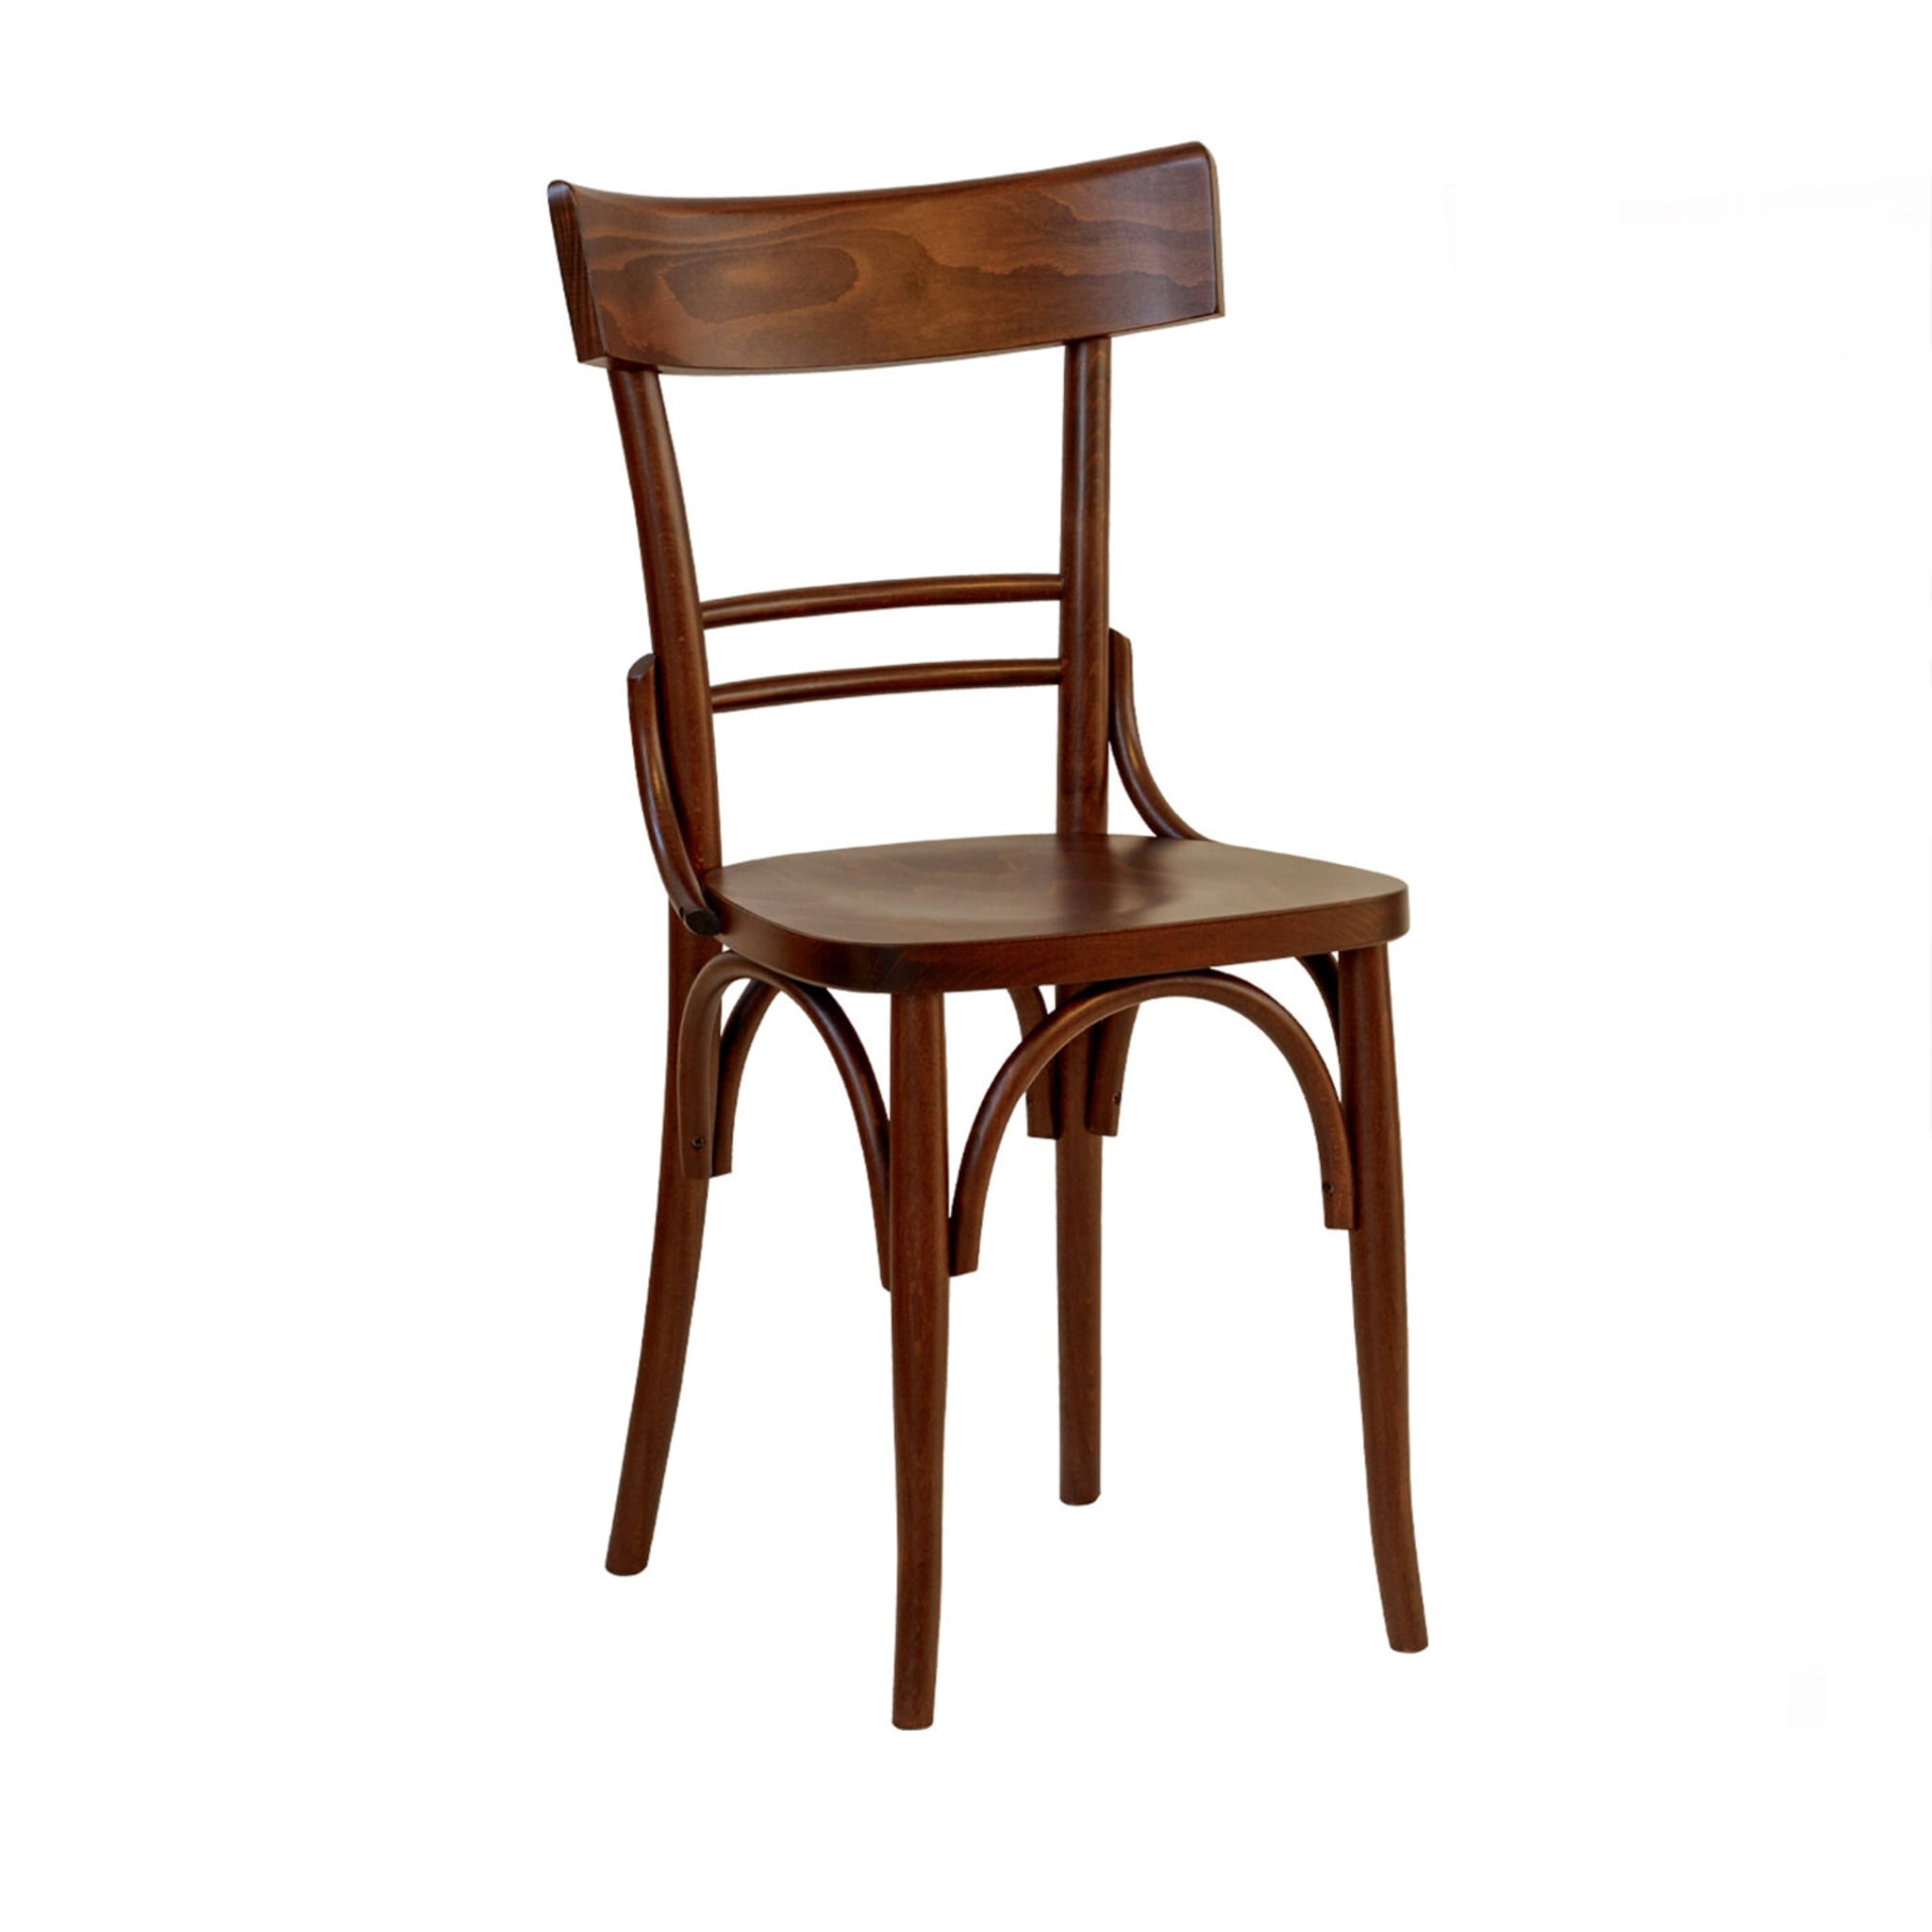 Rodi Set of 2 Chairs - Main view